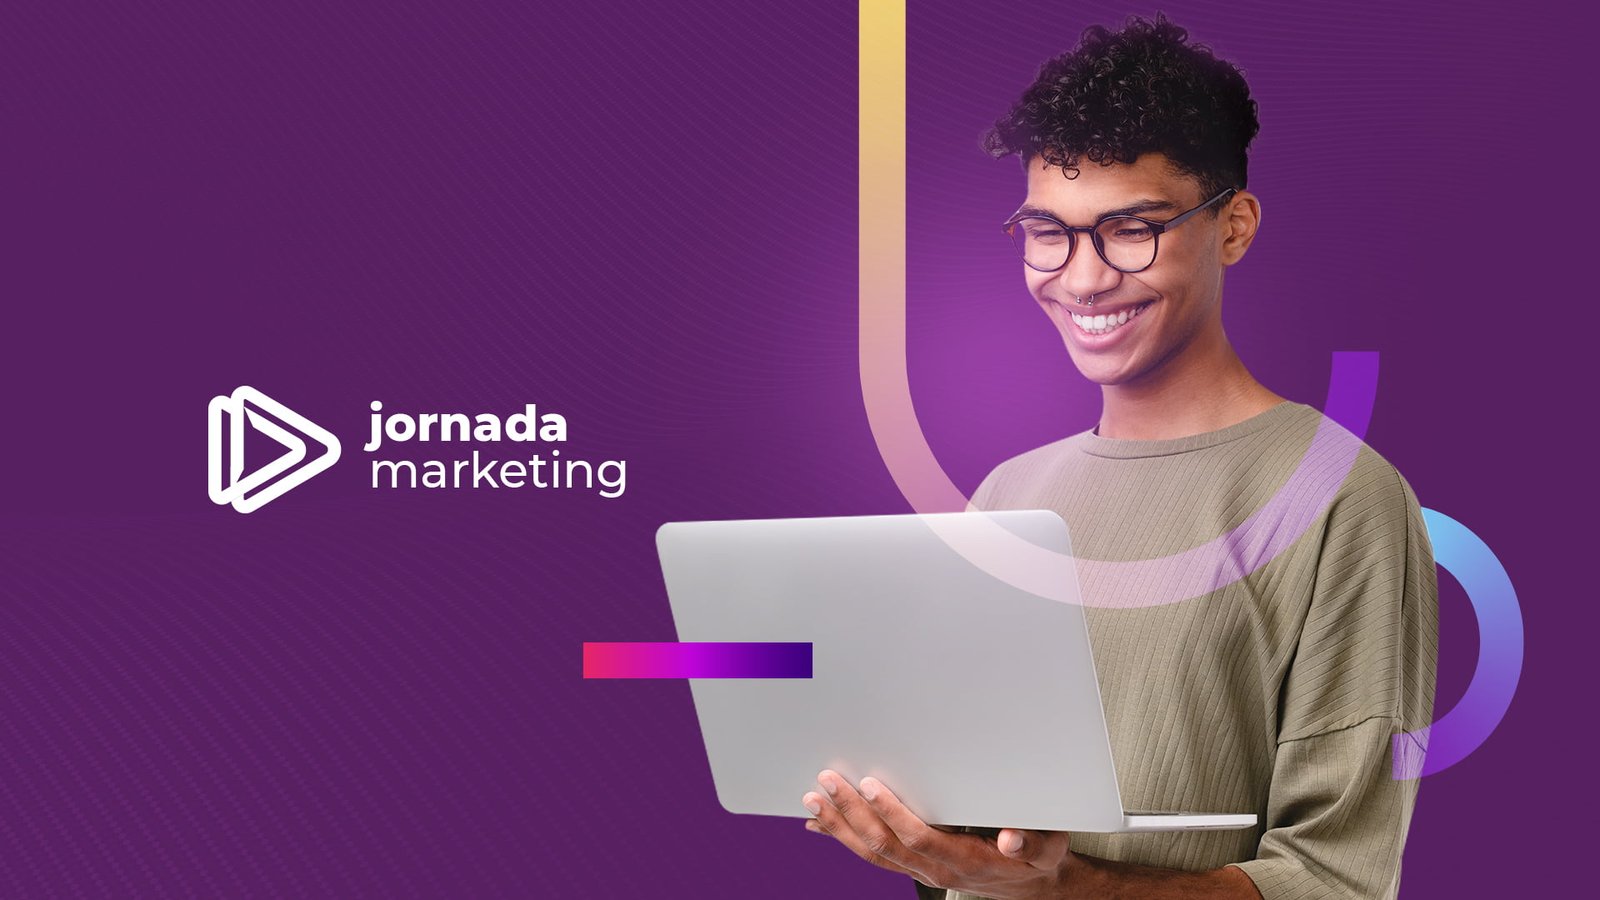 (c) Jornadamarketing.com.br